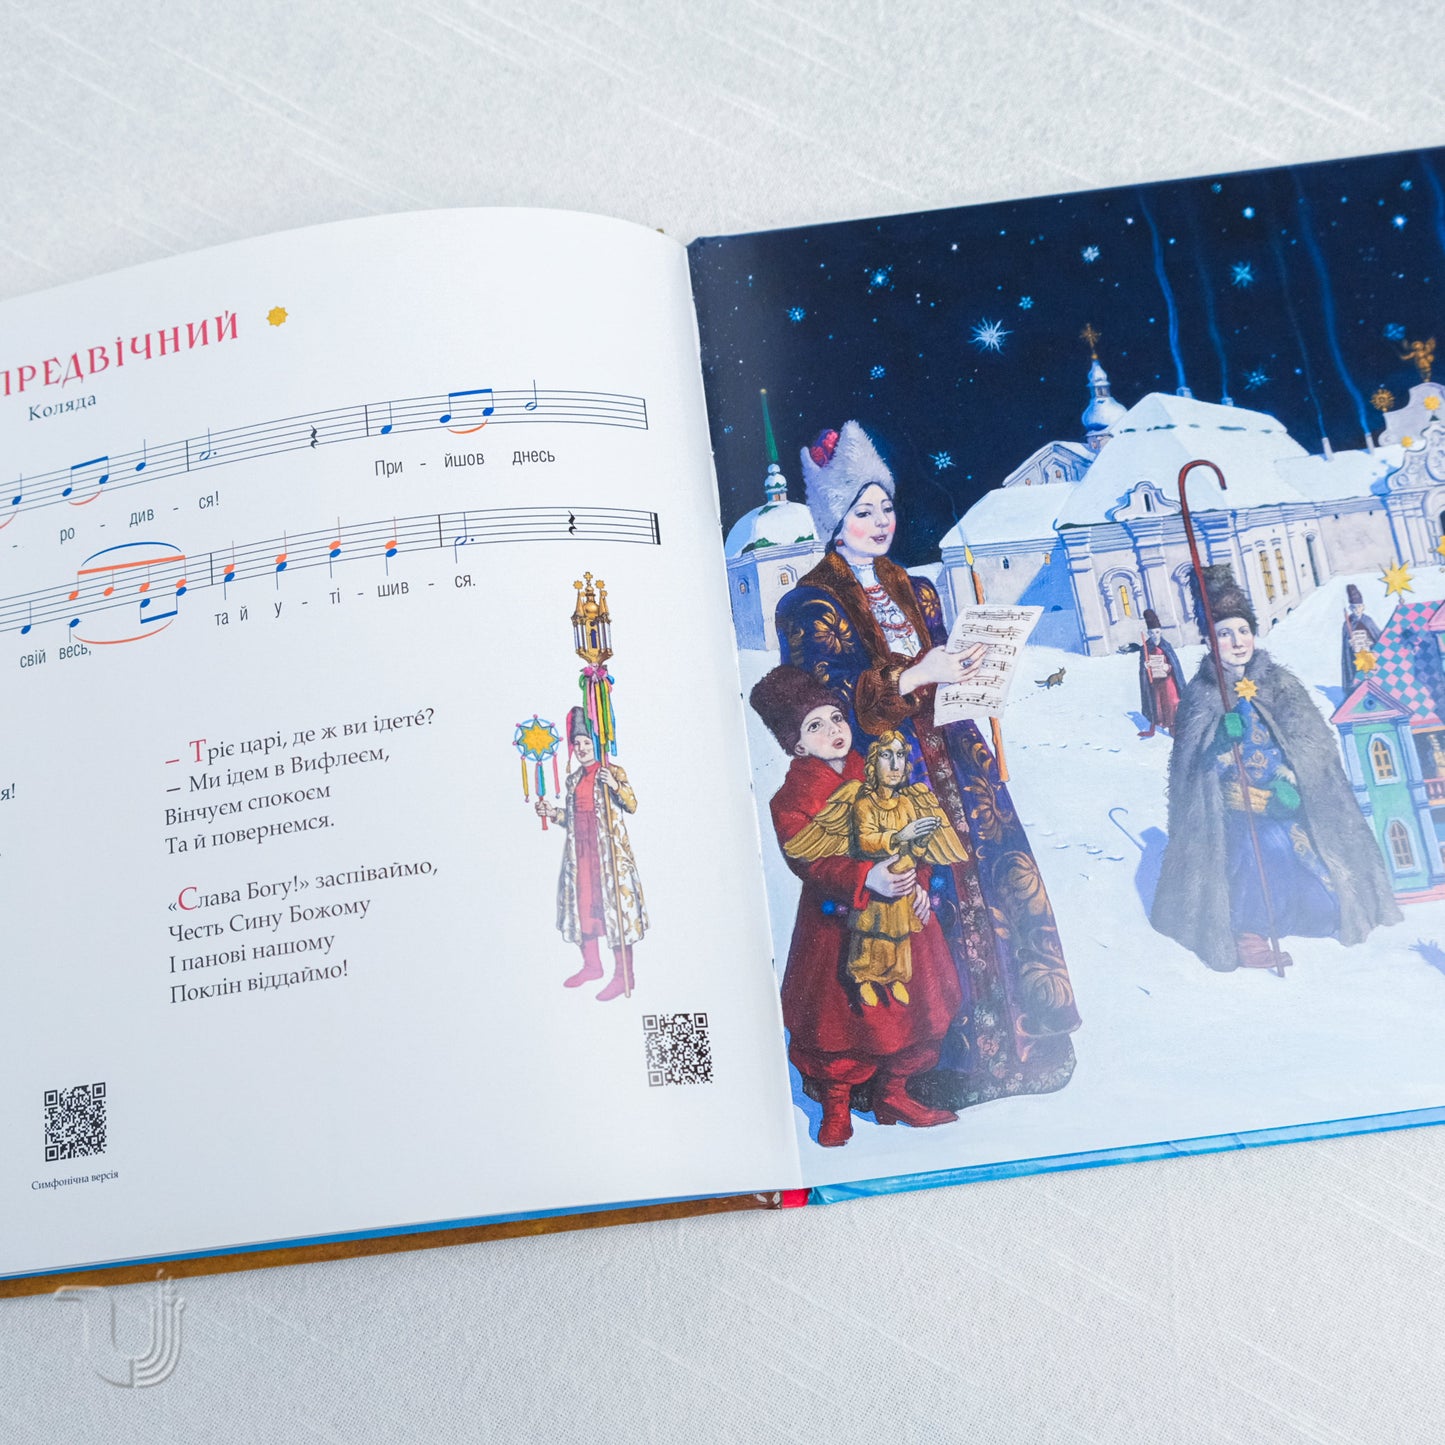 There was a new joy. Favorite Ukrainian folk carols and Christmas carols